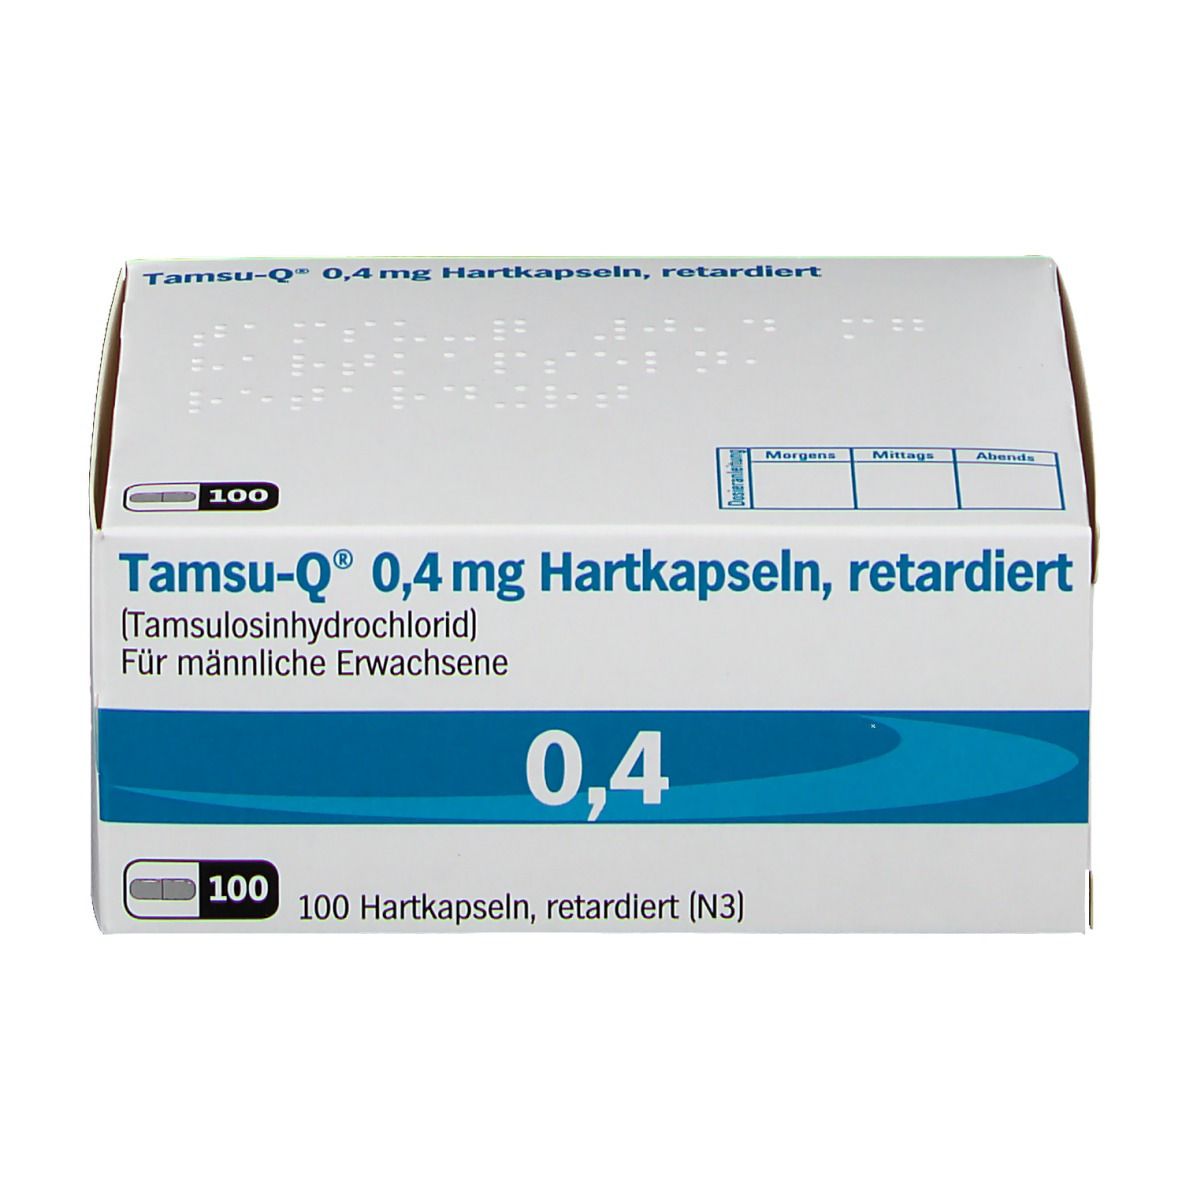 Tamsu-Q® 0,4 mg retardiert